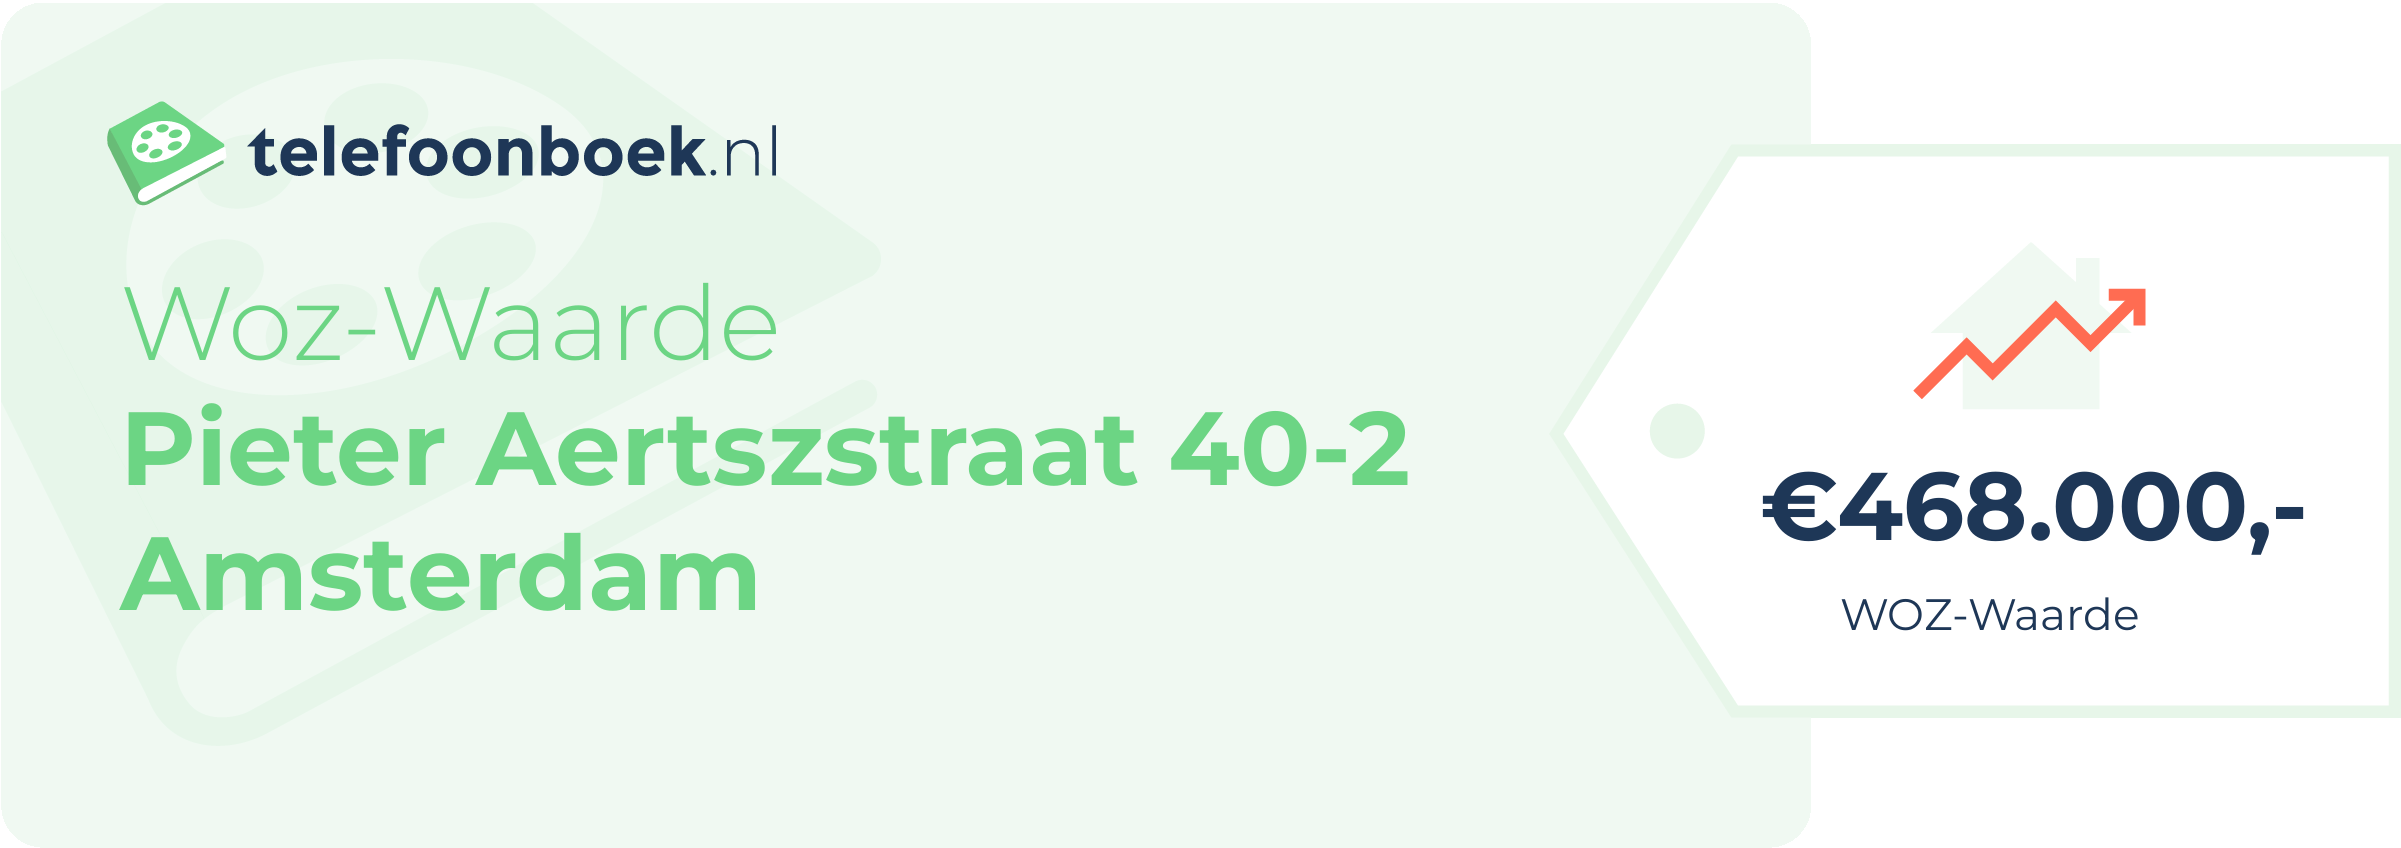 WOZ-waarde Pieter Aertszstraat 40-2 Amsterdam